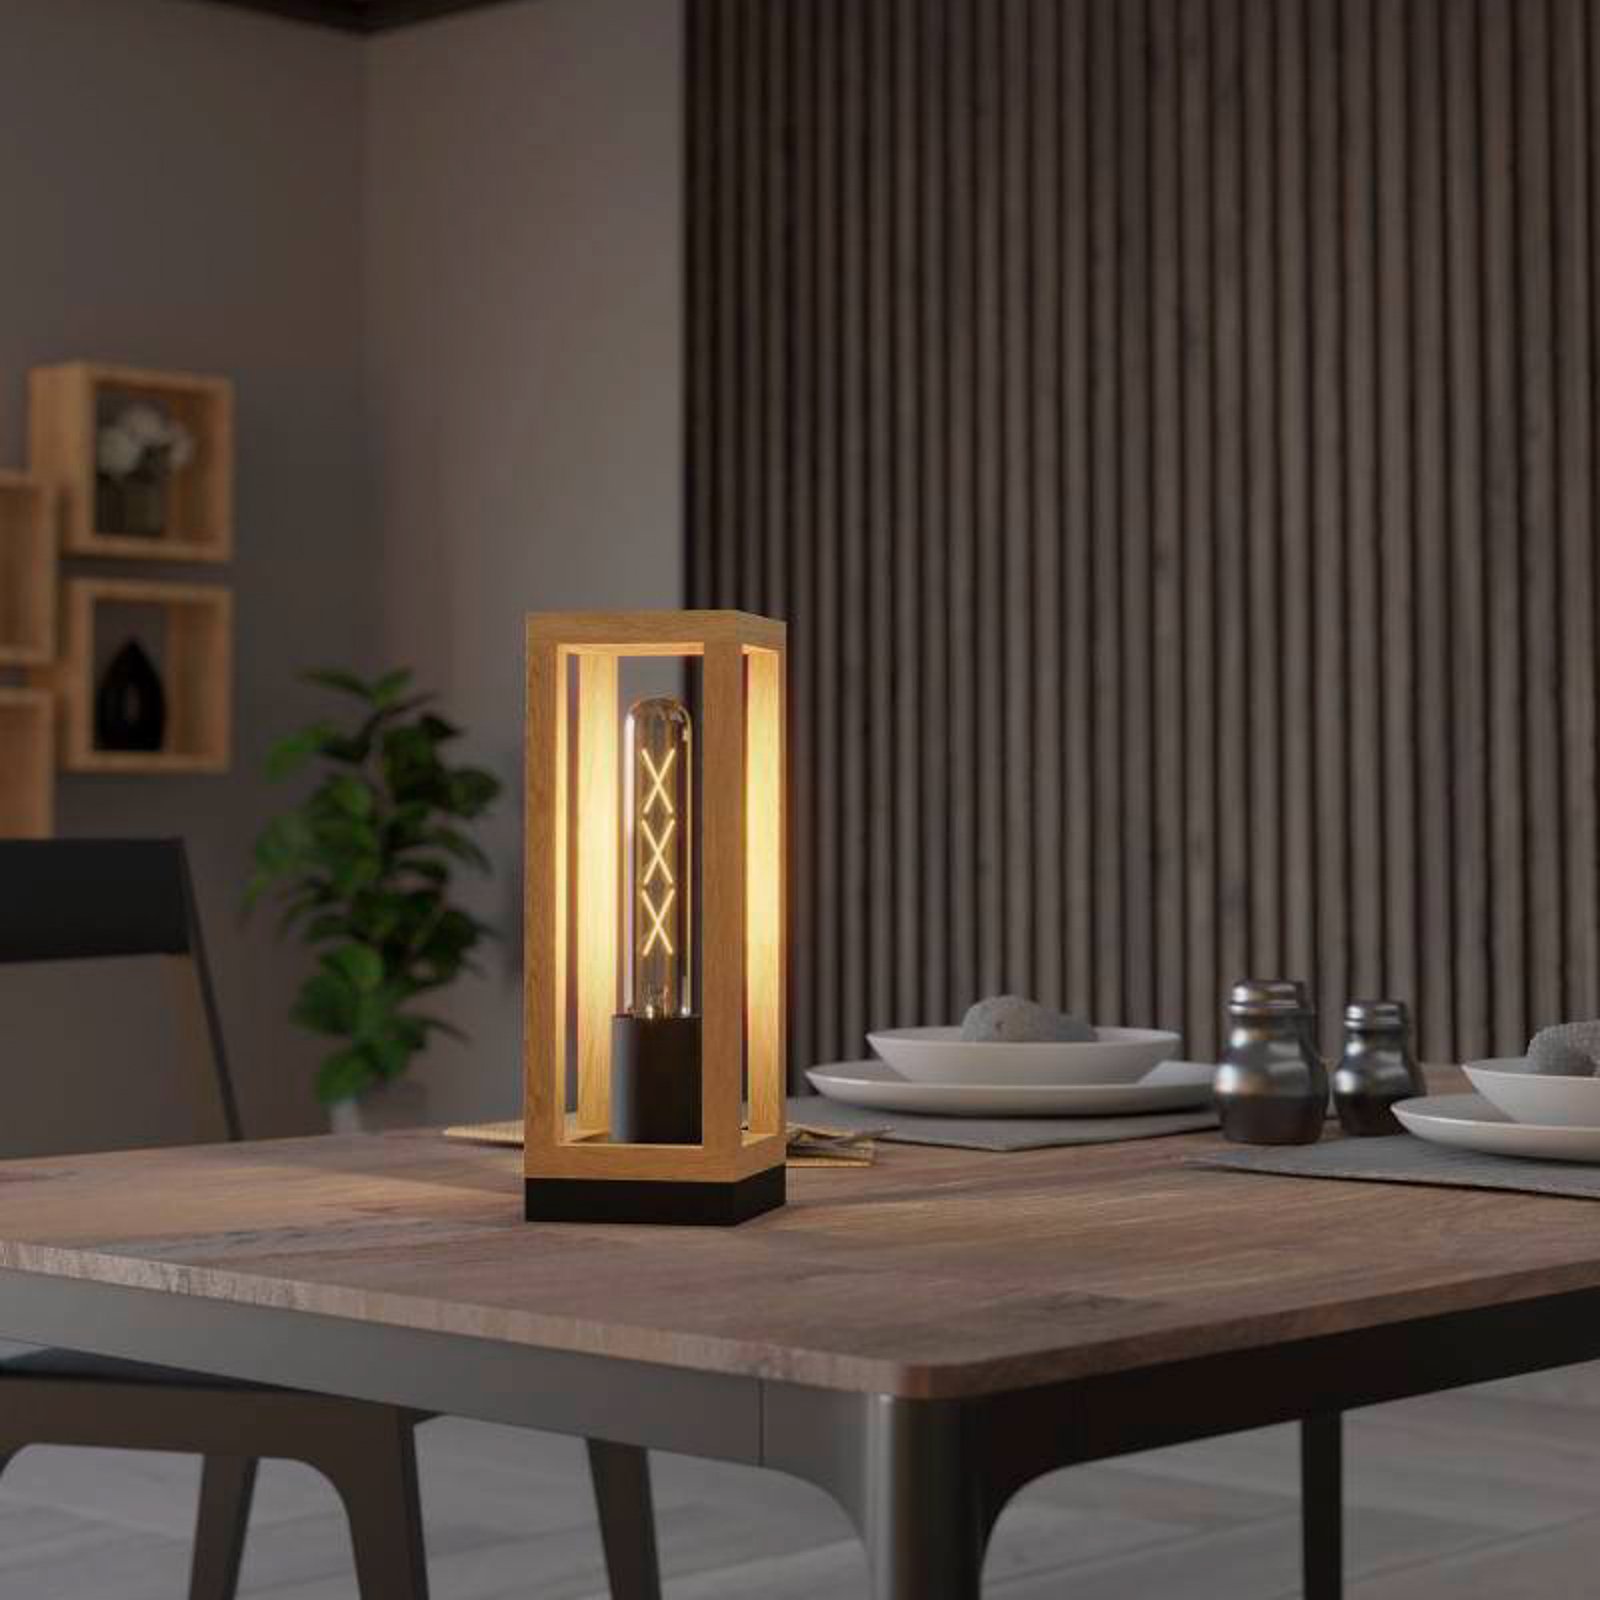 EGLO Nafferton table lamp made of wood